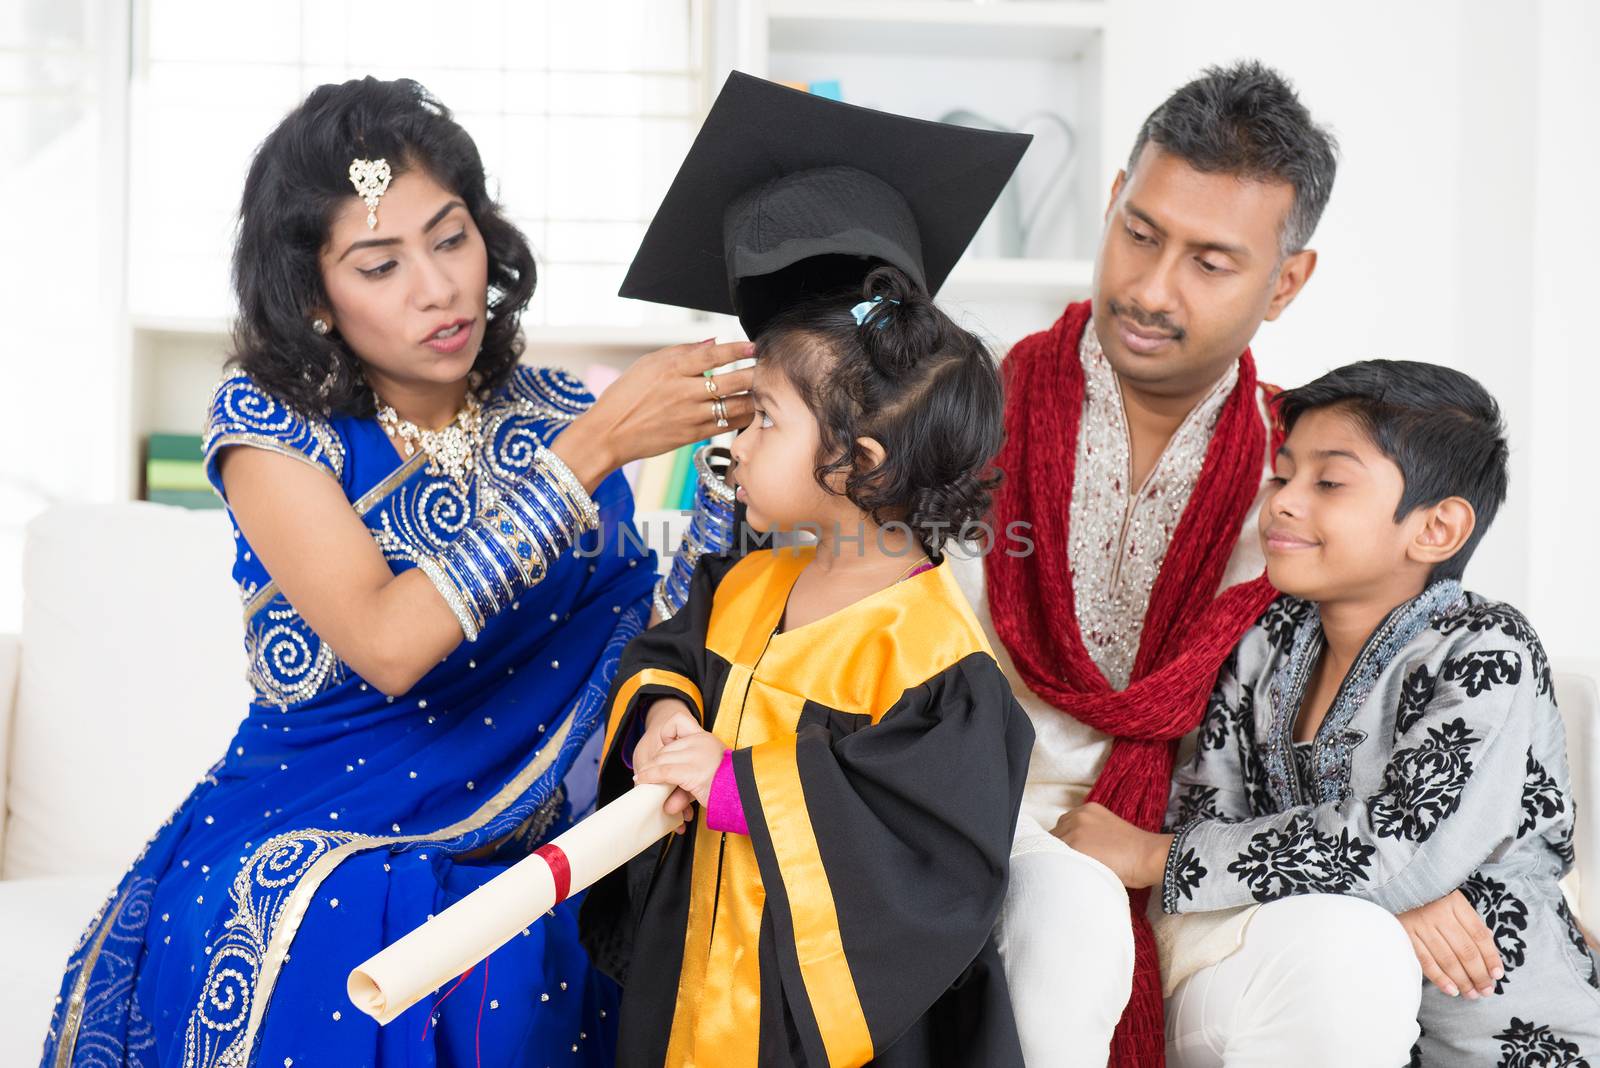 Kindergarten graduation. Asian Indian family, parents and children on kinder graduate day.